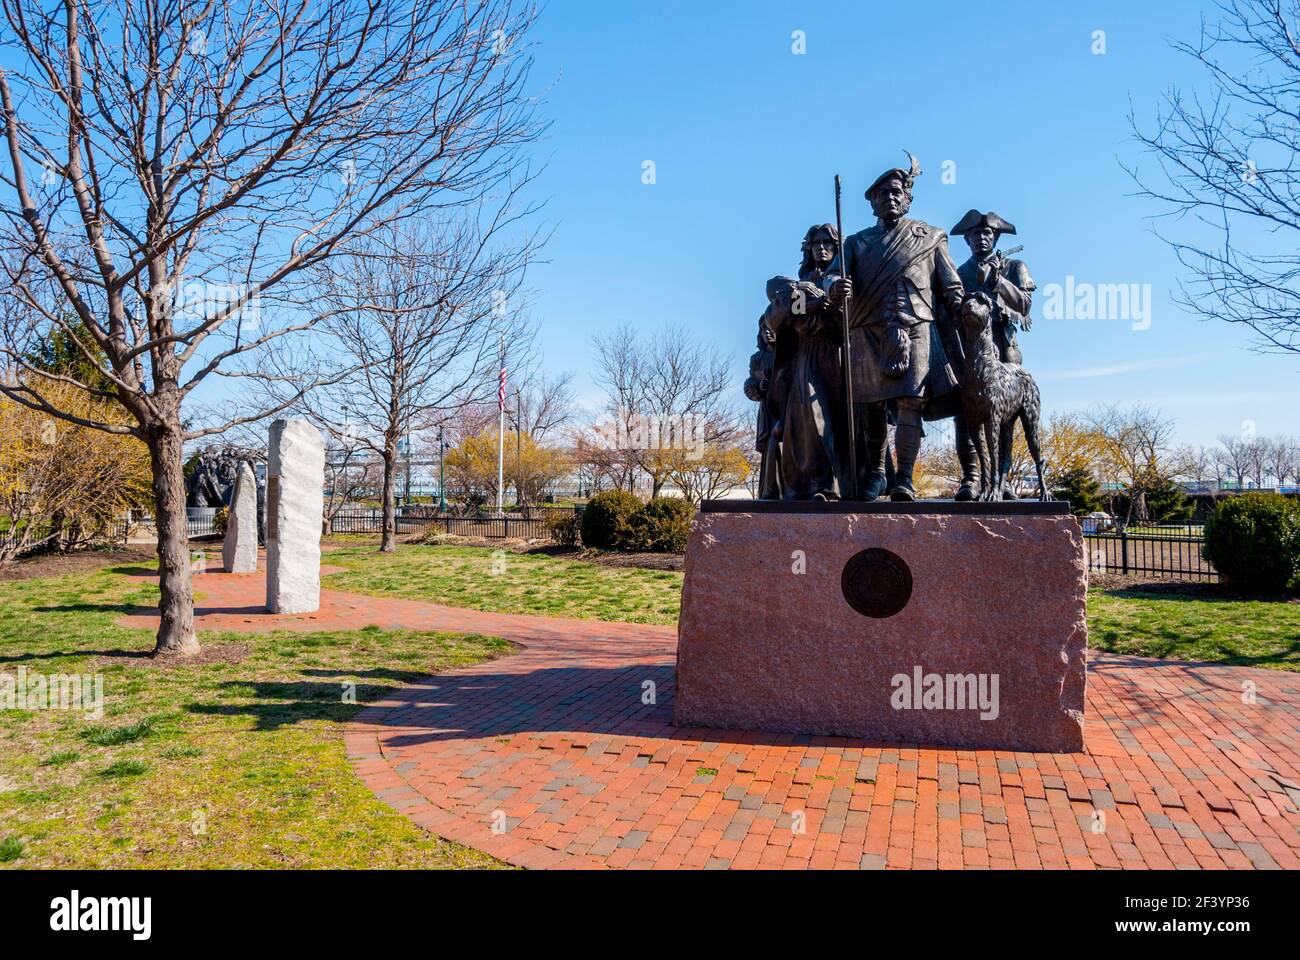 The Scottish Memorial in I-95 Park commemorating The Scottish immigrants, Philadelphia Pennsylvania Stock Photo